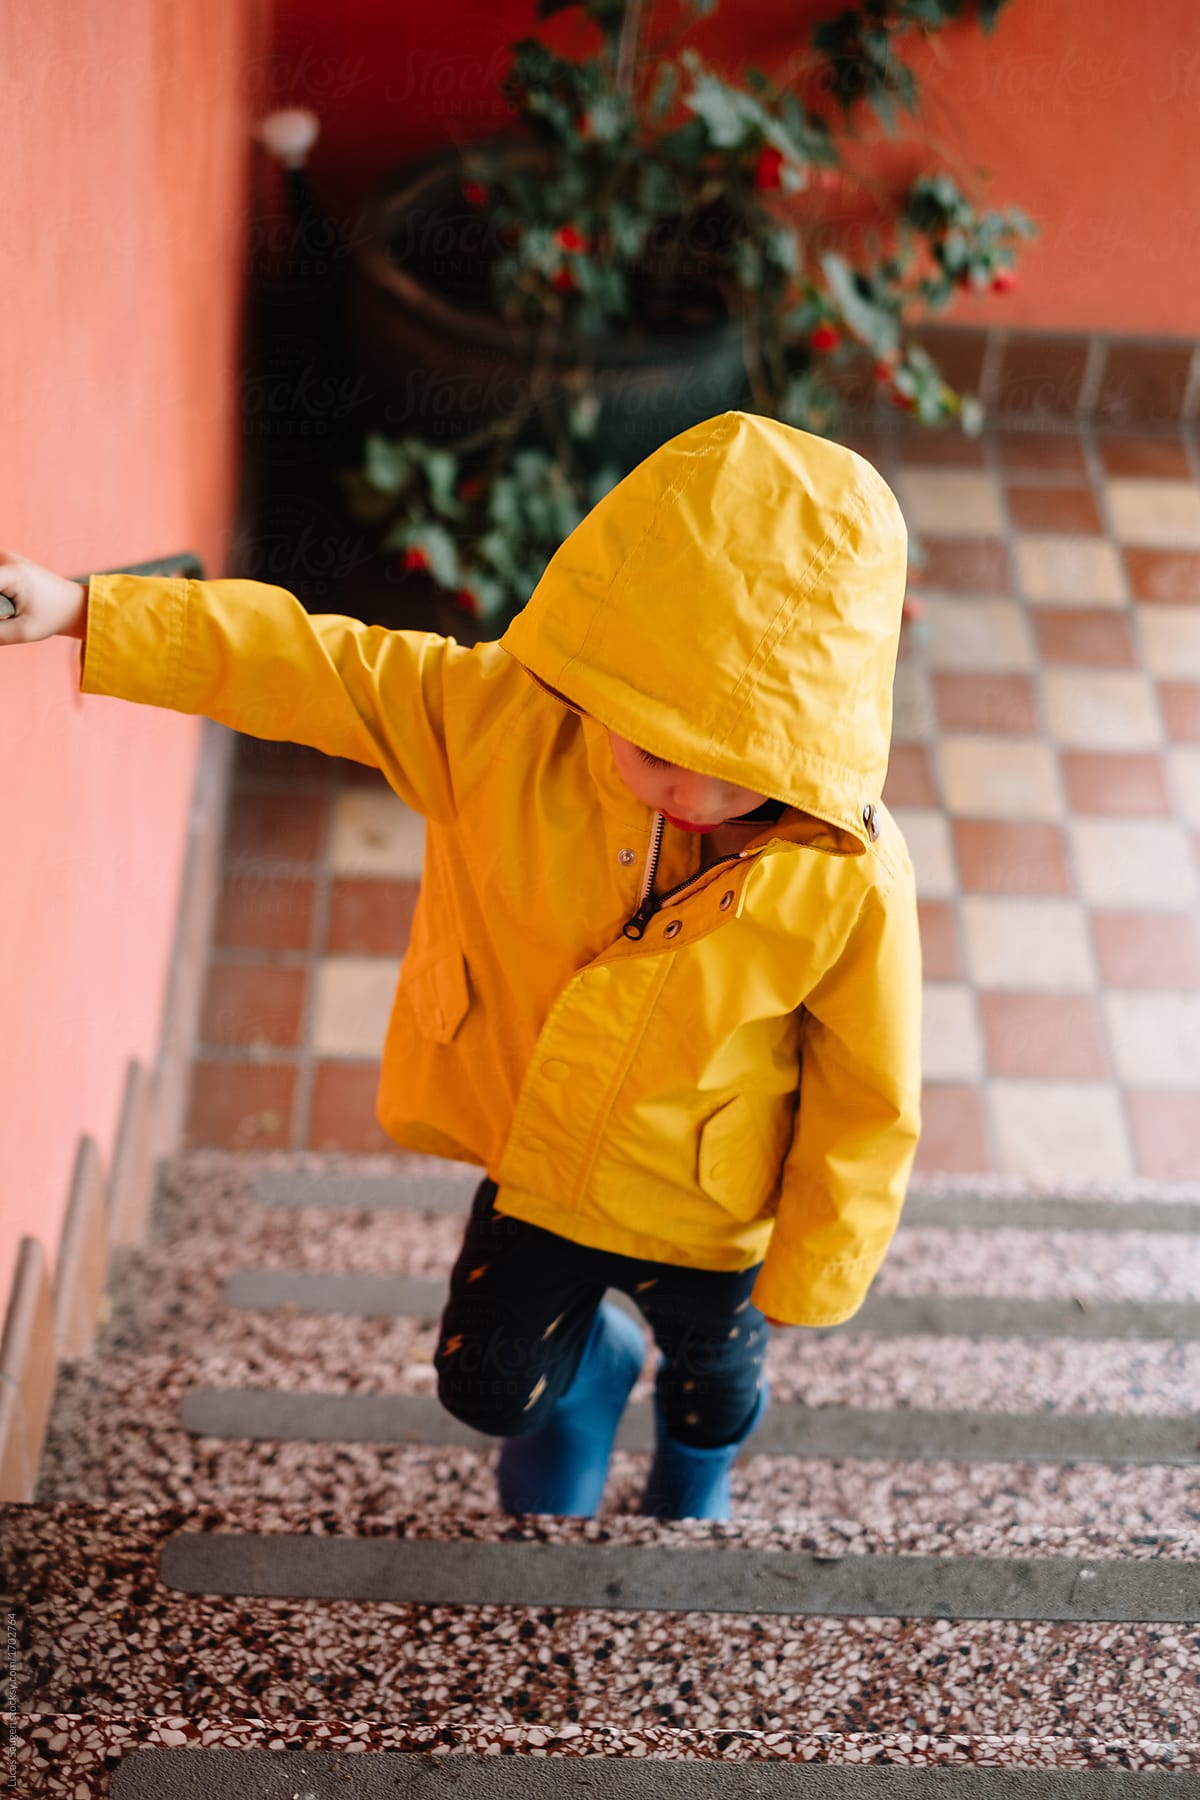 Boy in raincoat walking up stairs